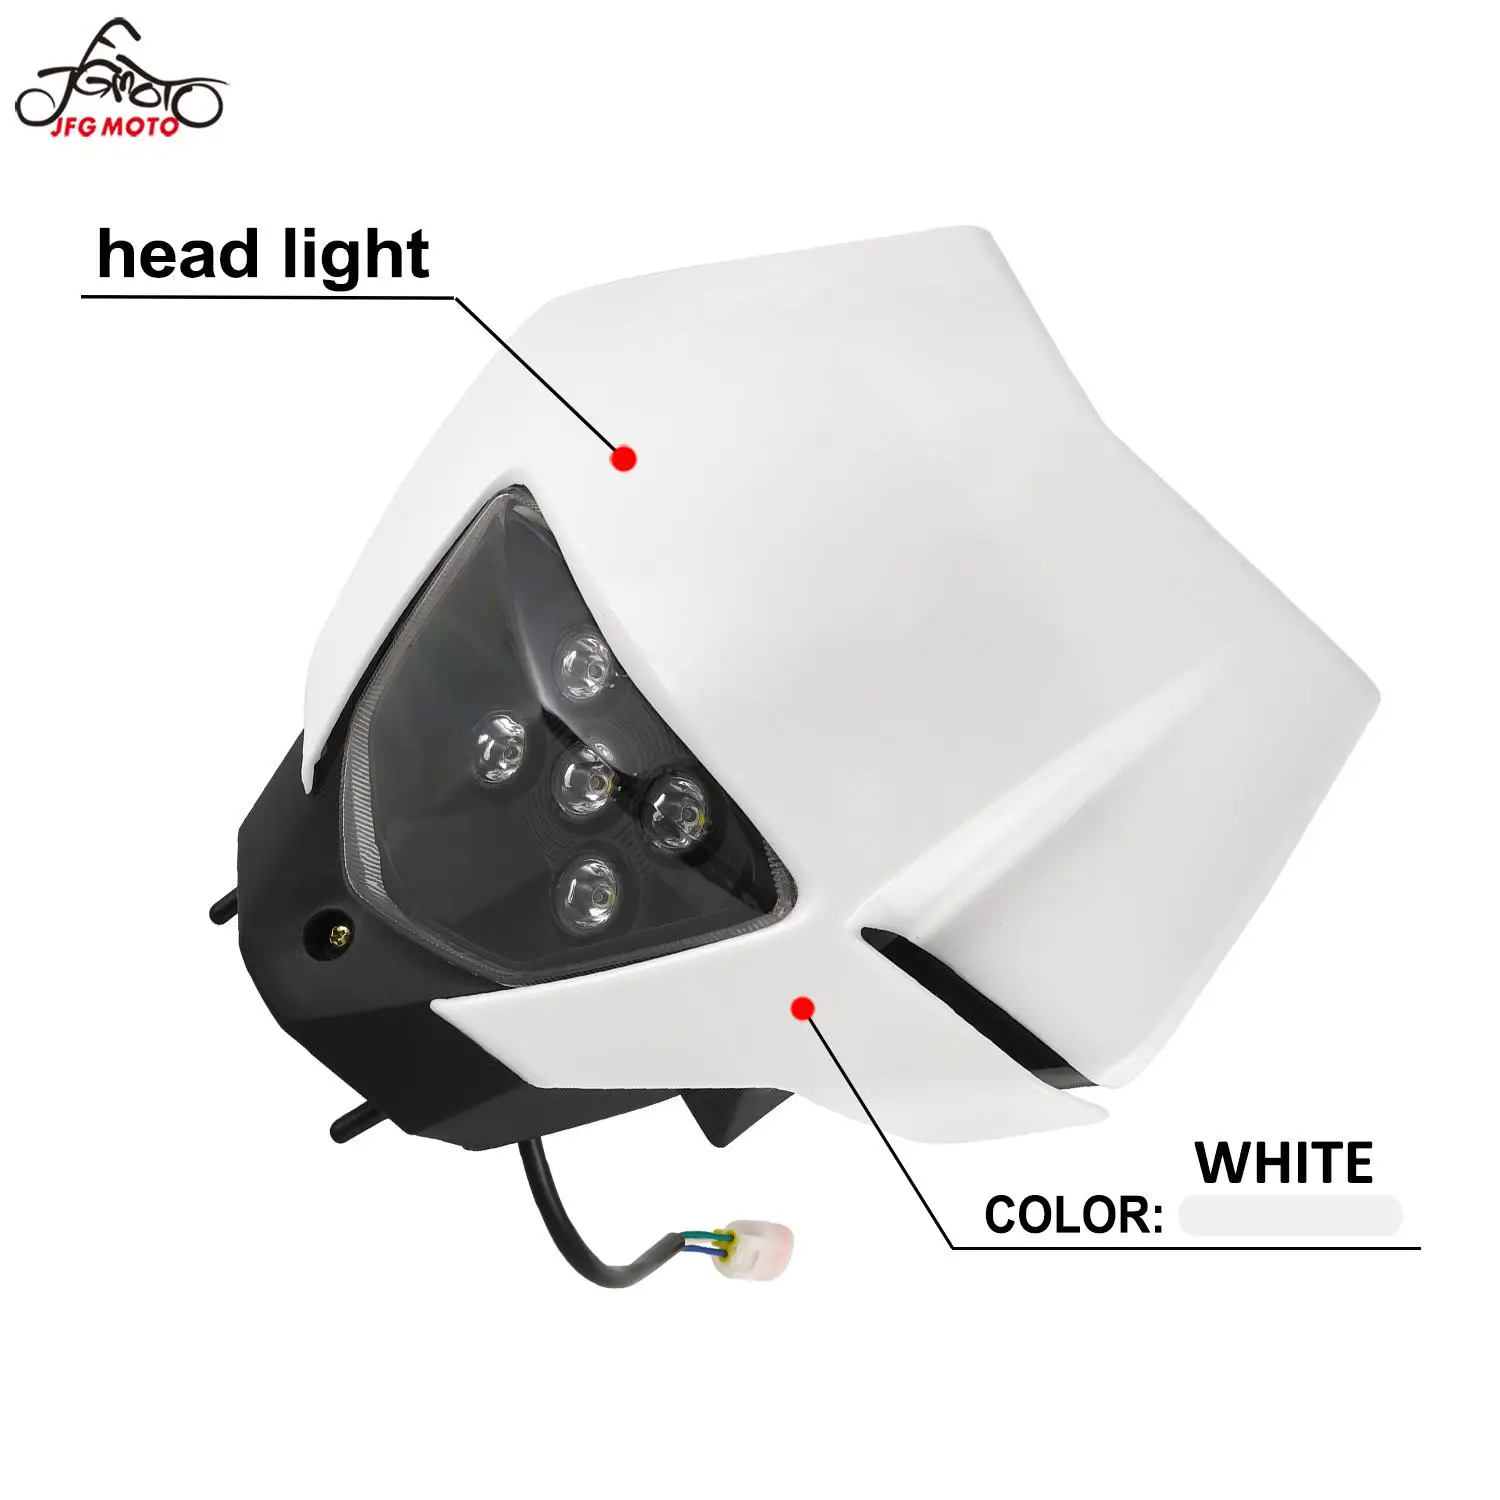 New Motorcycle LED Headlight Headlamp Head Lamp Light For KTM EXC XC XCF XCW XCFW SX SXF SXS 125 150 250 350 450 530 Universal